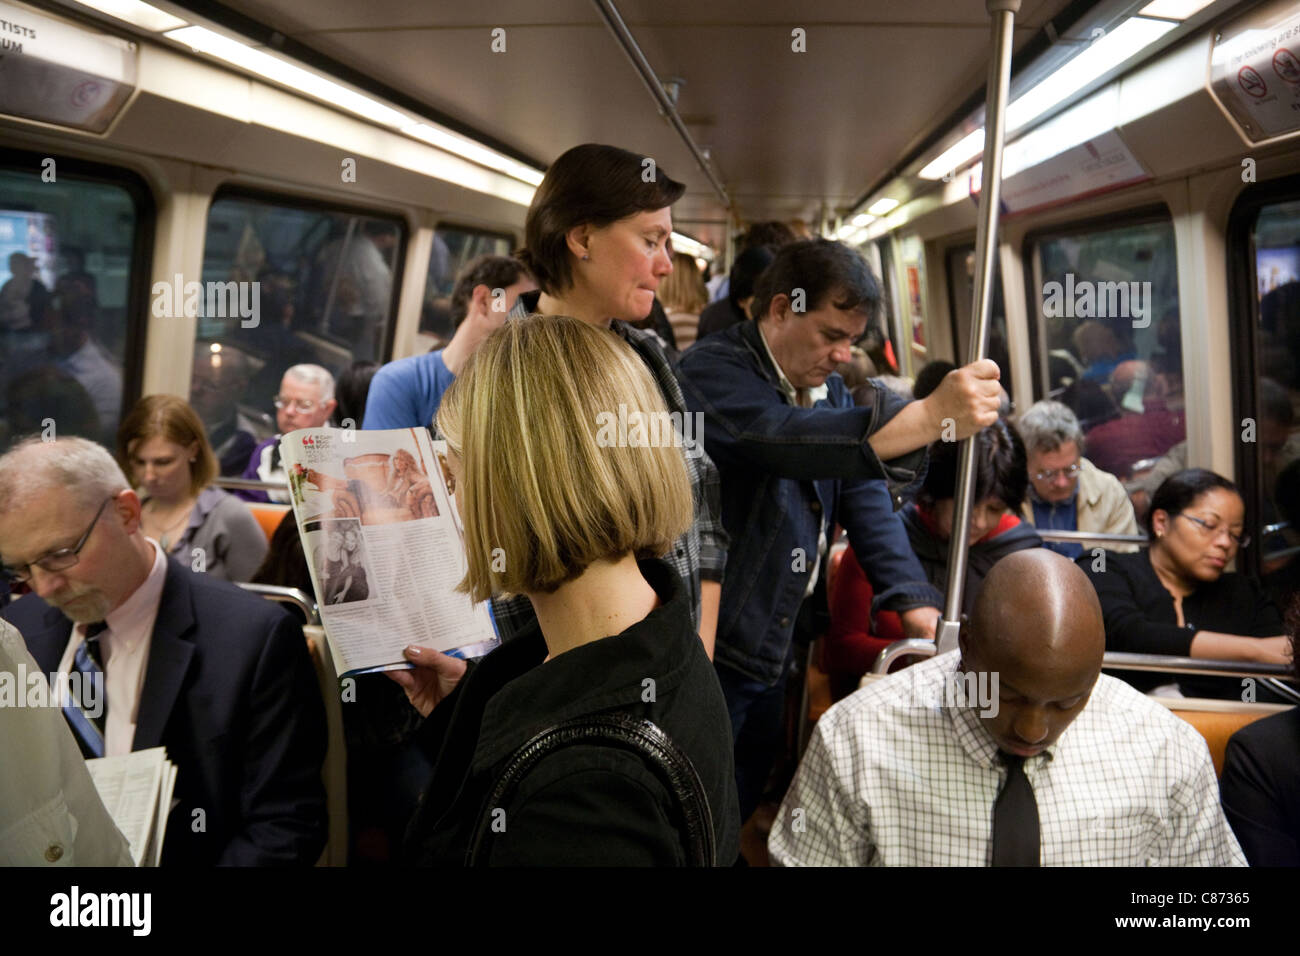 A crowded subway train, Washing DC metro, USA Stock Photo